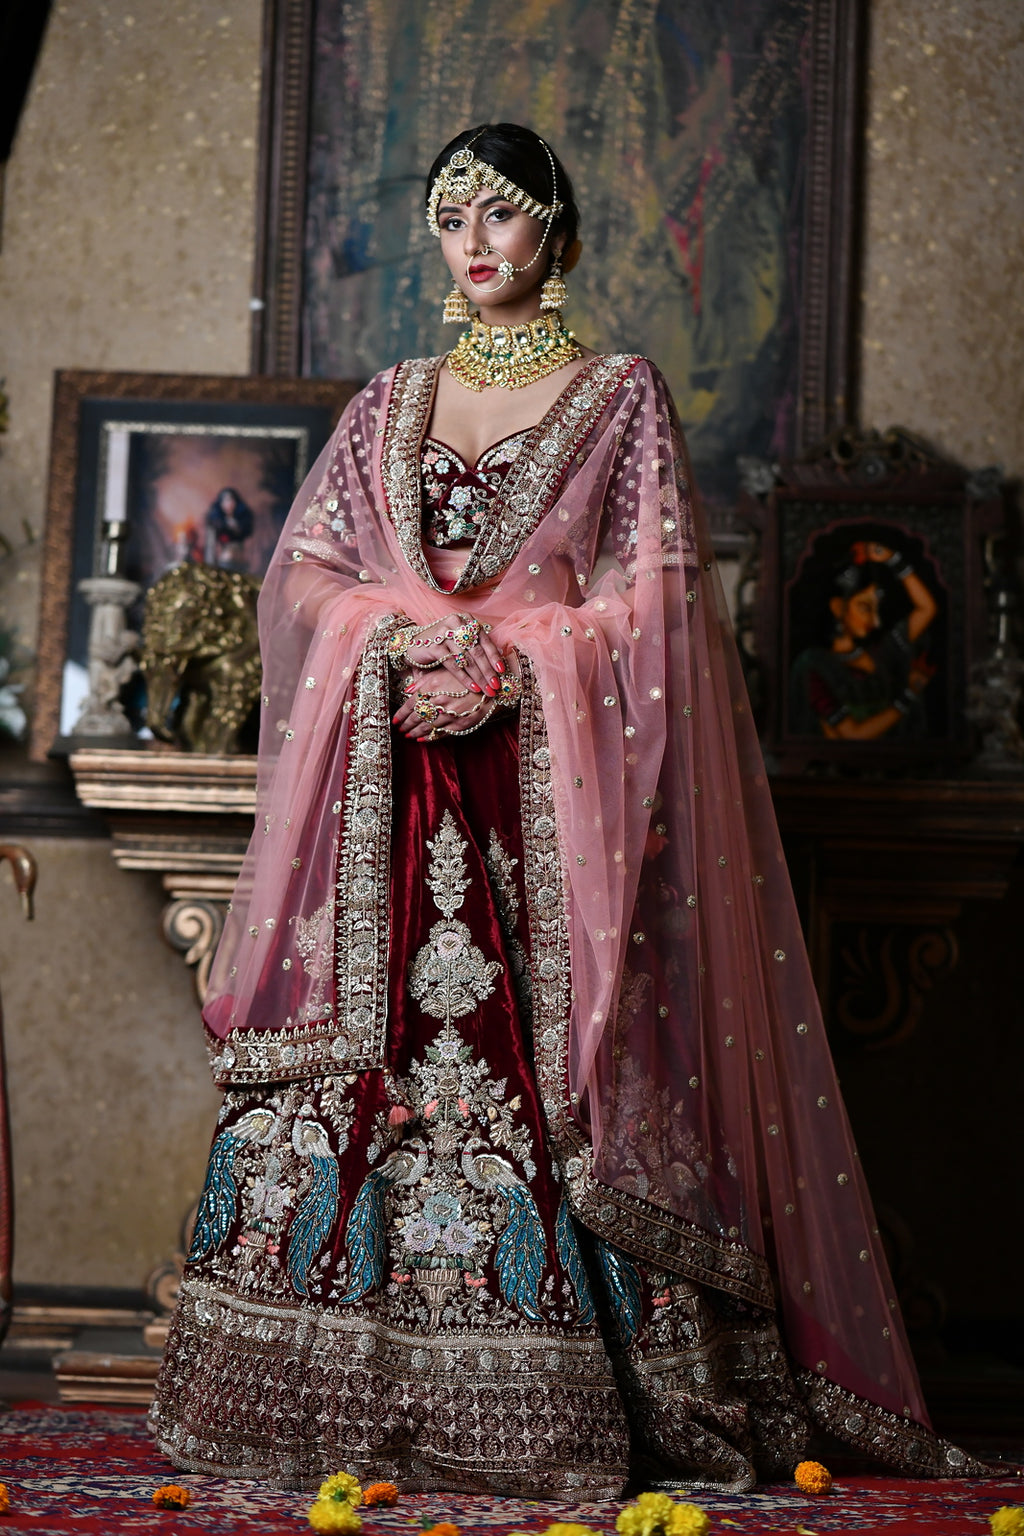 Shradhha Kapoor is a modern bride in Falguni Shane Peacock's dreamy couture  red lehenga | Fashion Trends - Hindustan Times